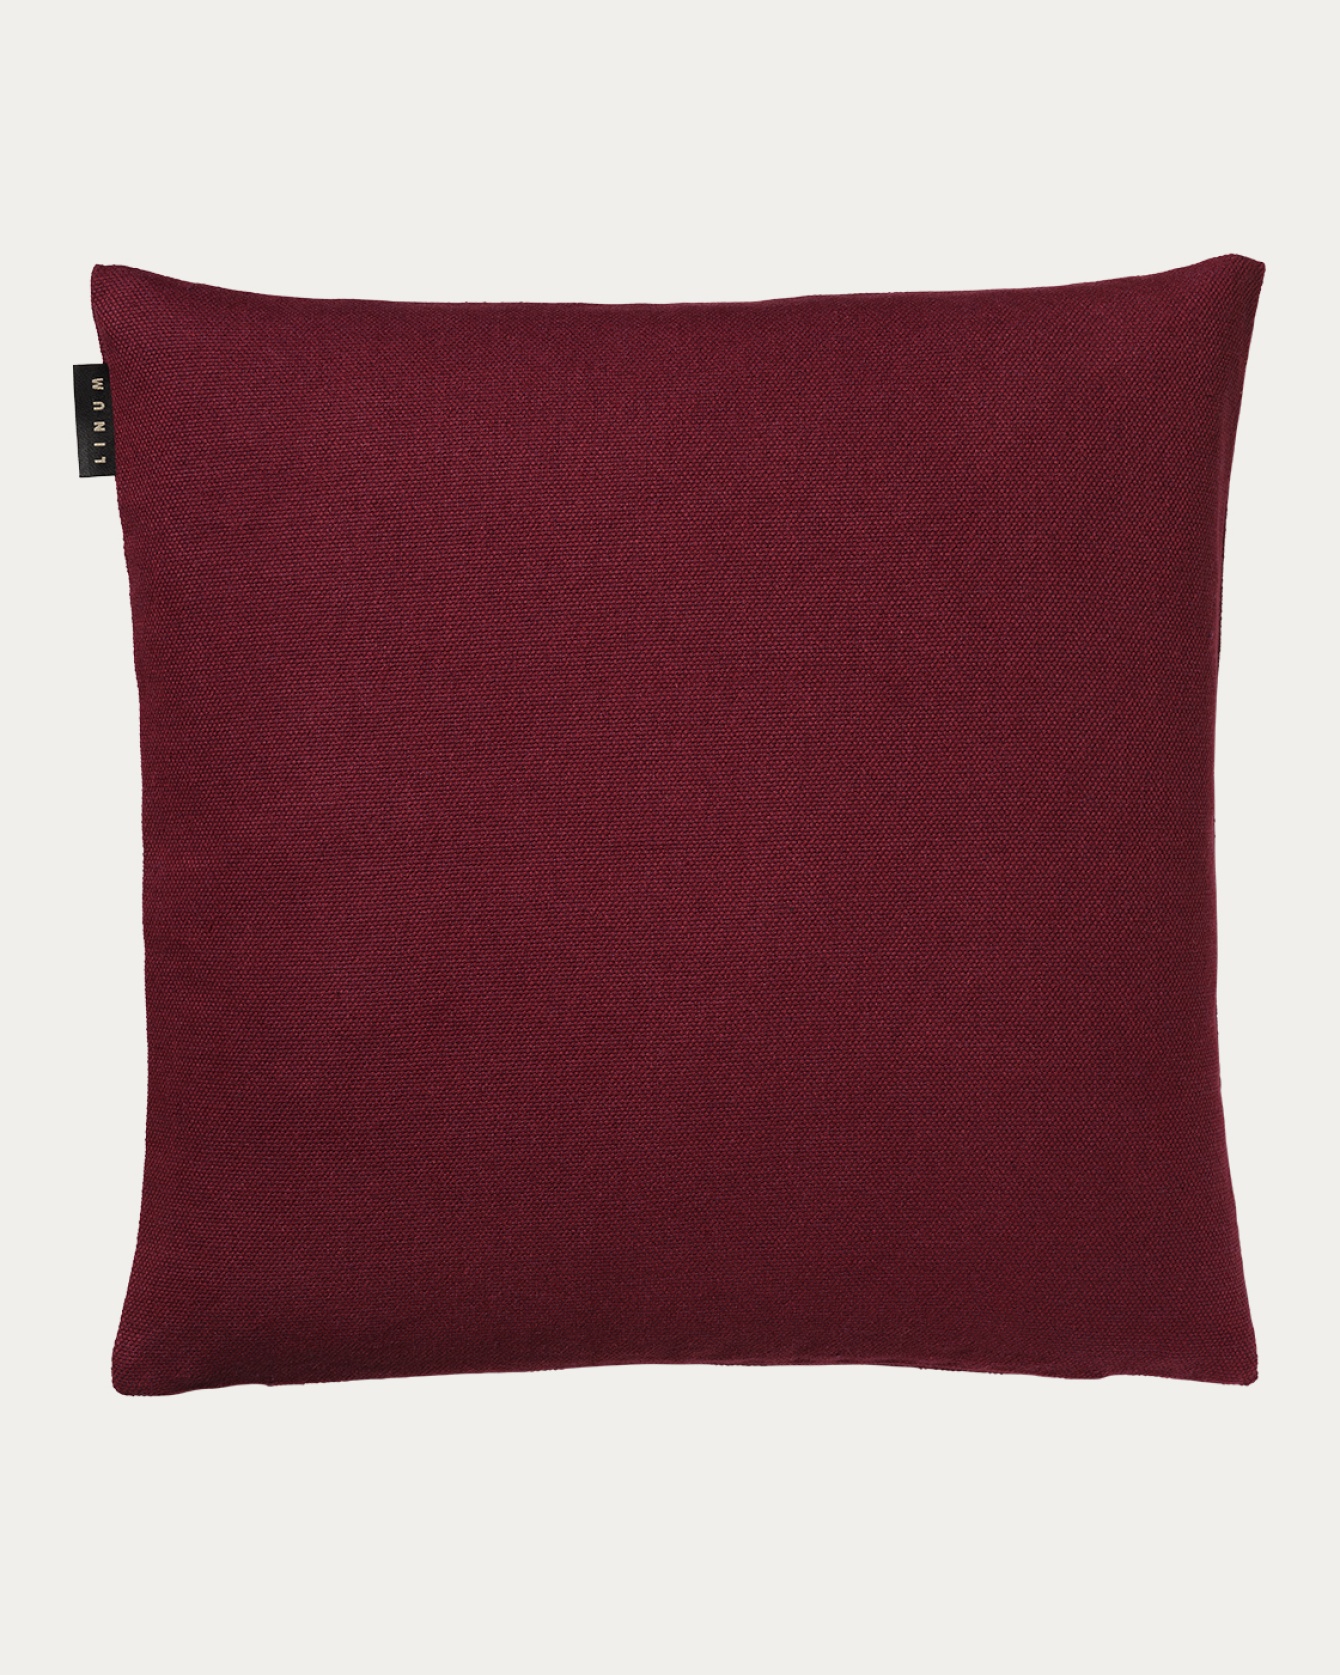 PEPPER Cushion cover 60x60 cm Burgundy red